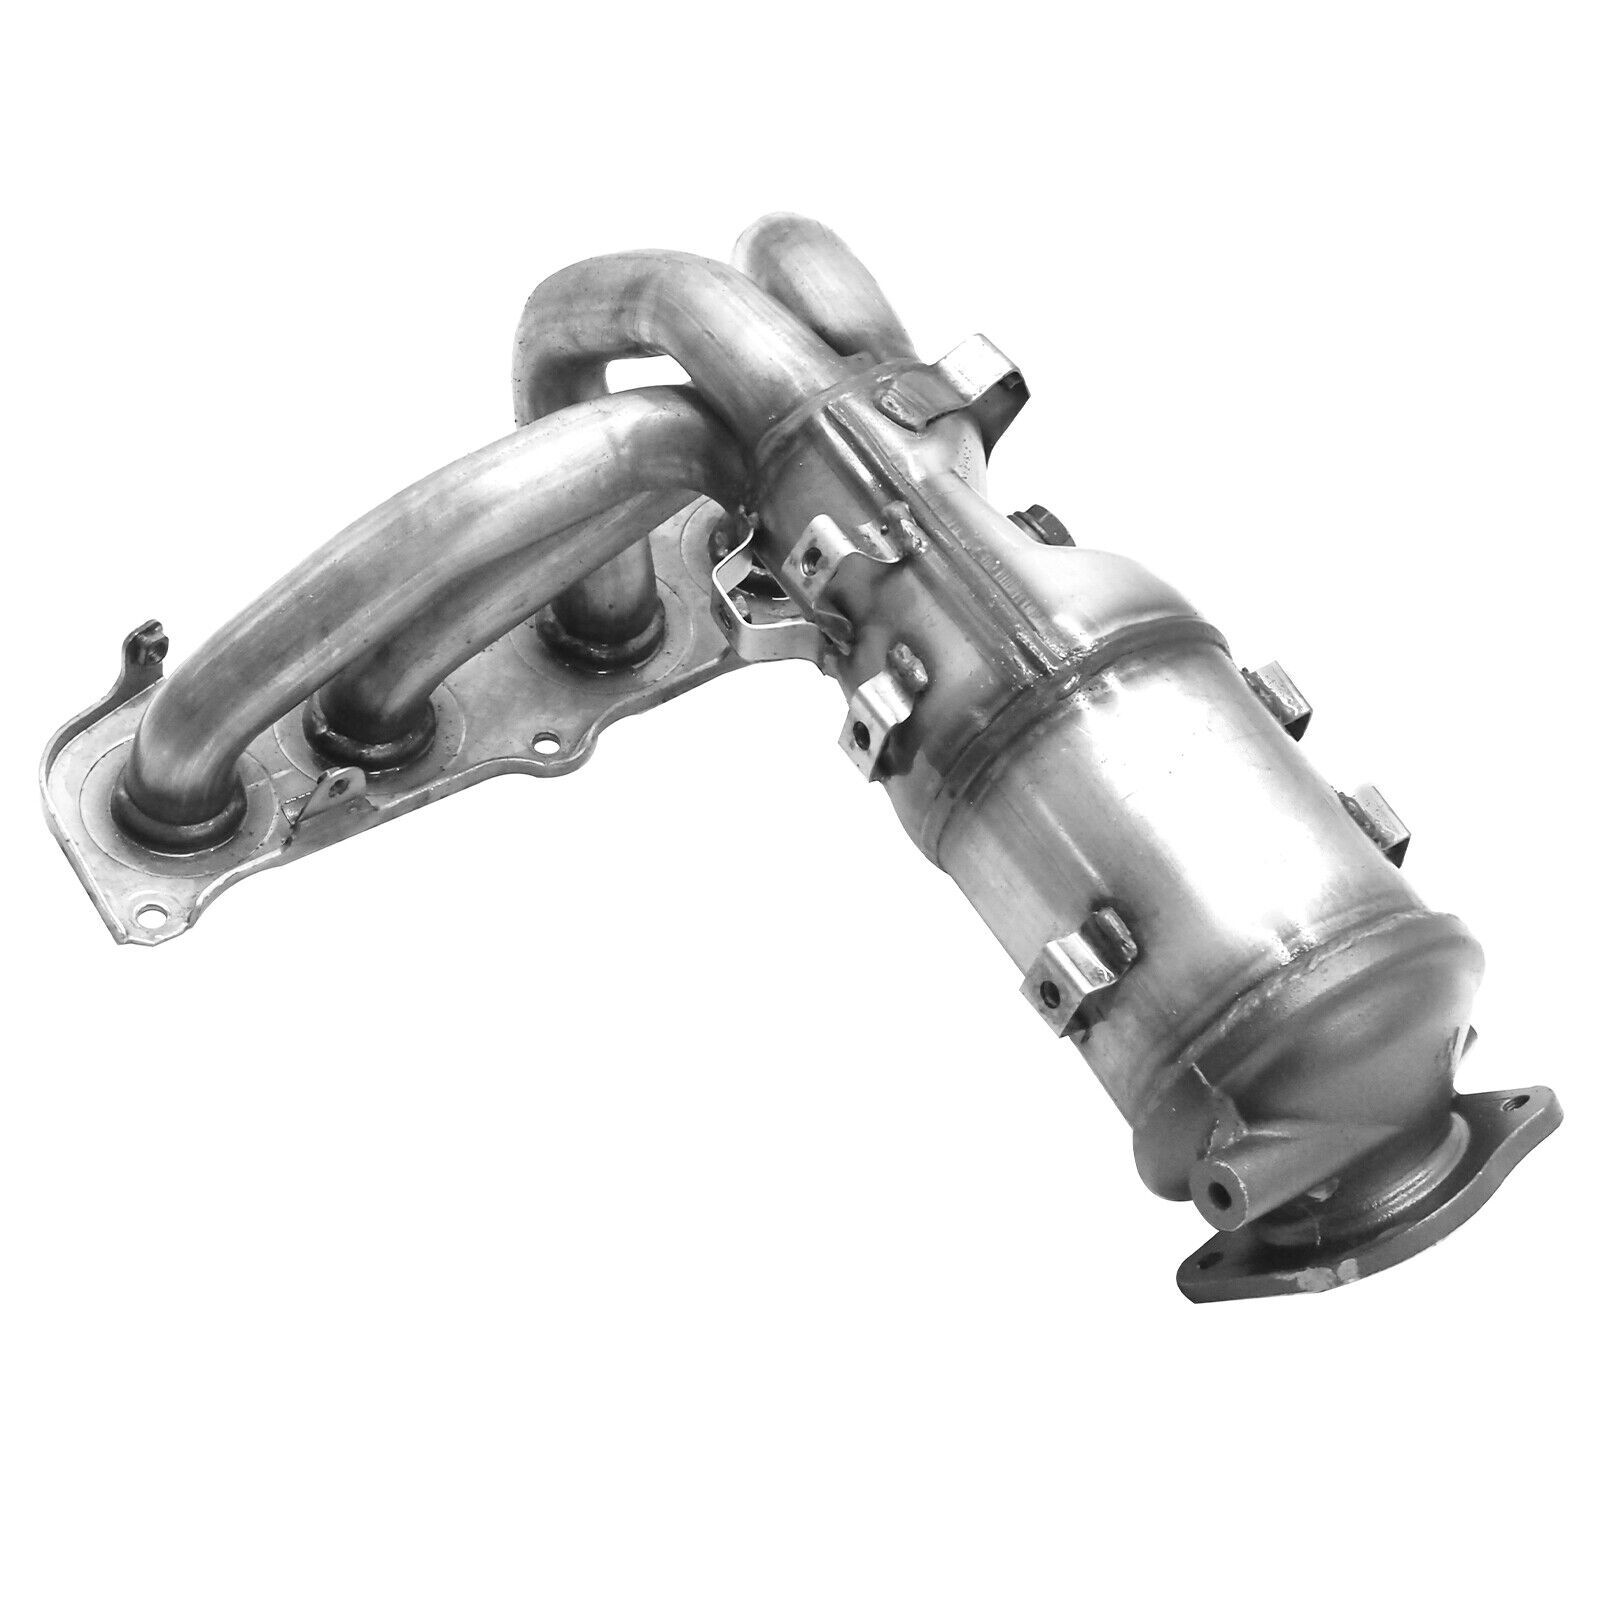 Exhaust Header Manifold w/Catalytic Converter for 02-06 Toyota Camry 2.4/Solara